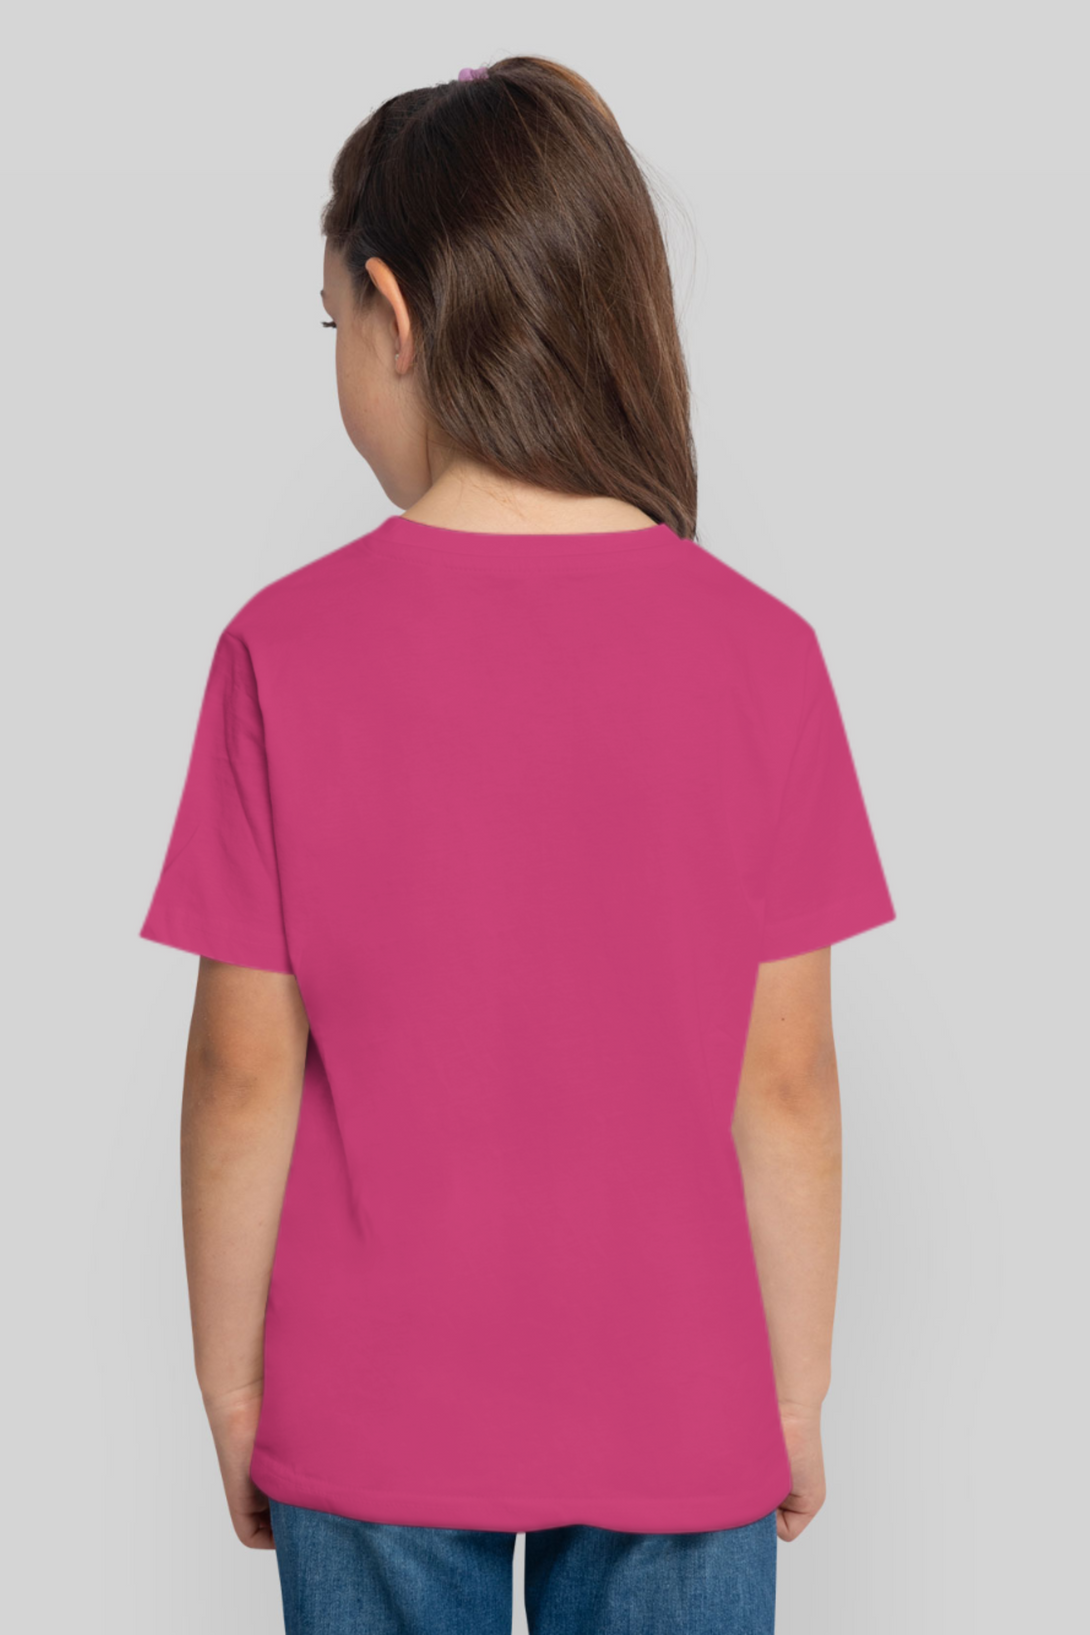 Pink T-Shirt For Girl - WowWaves - 3